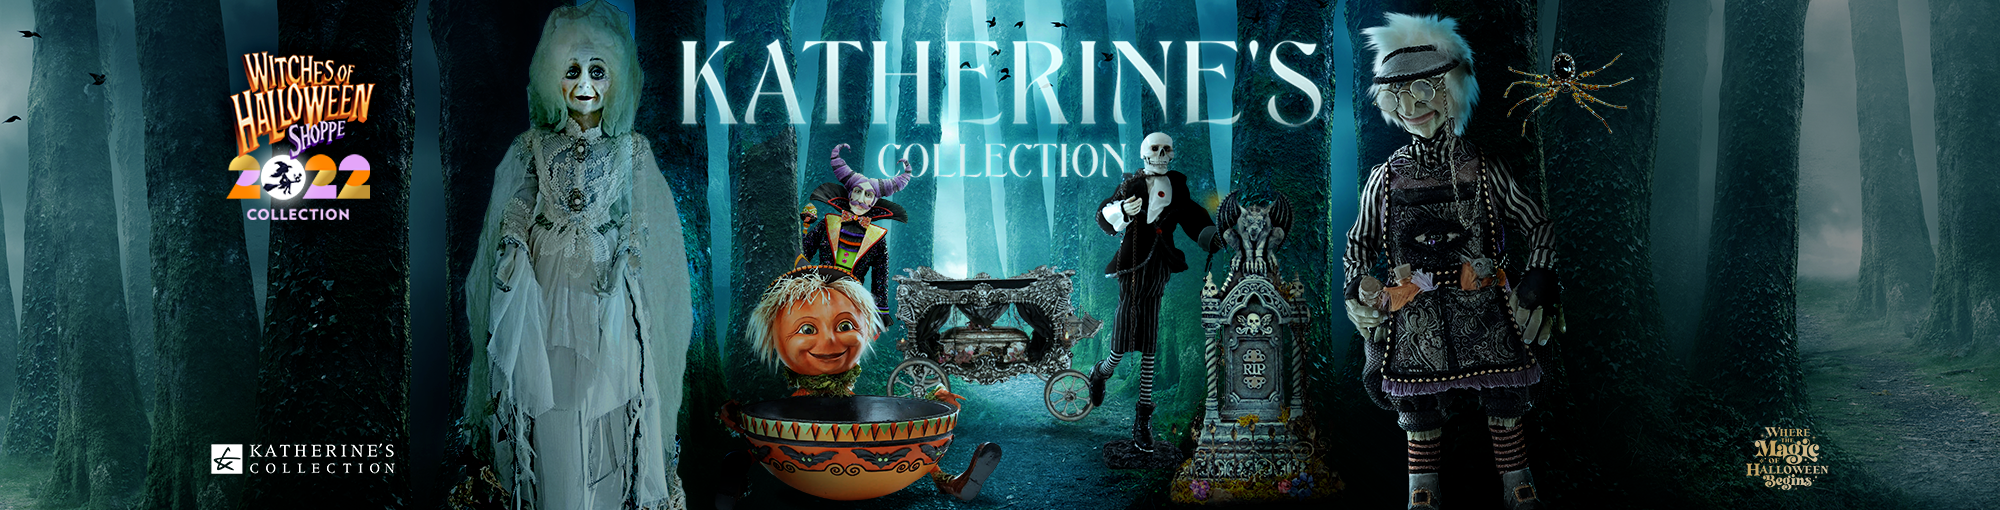 Katherine's Collection Halloween